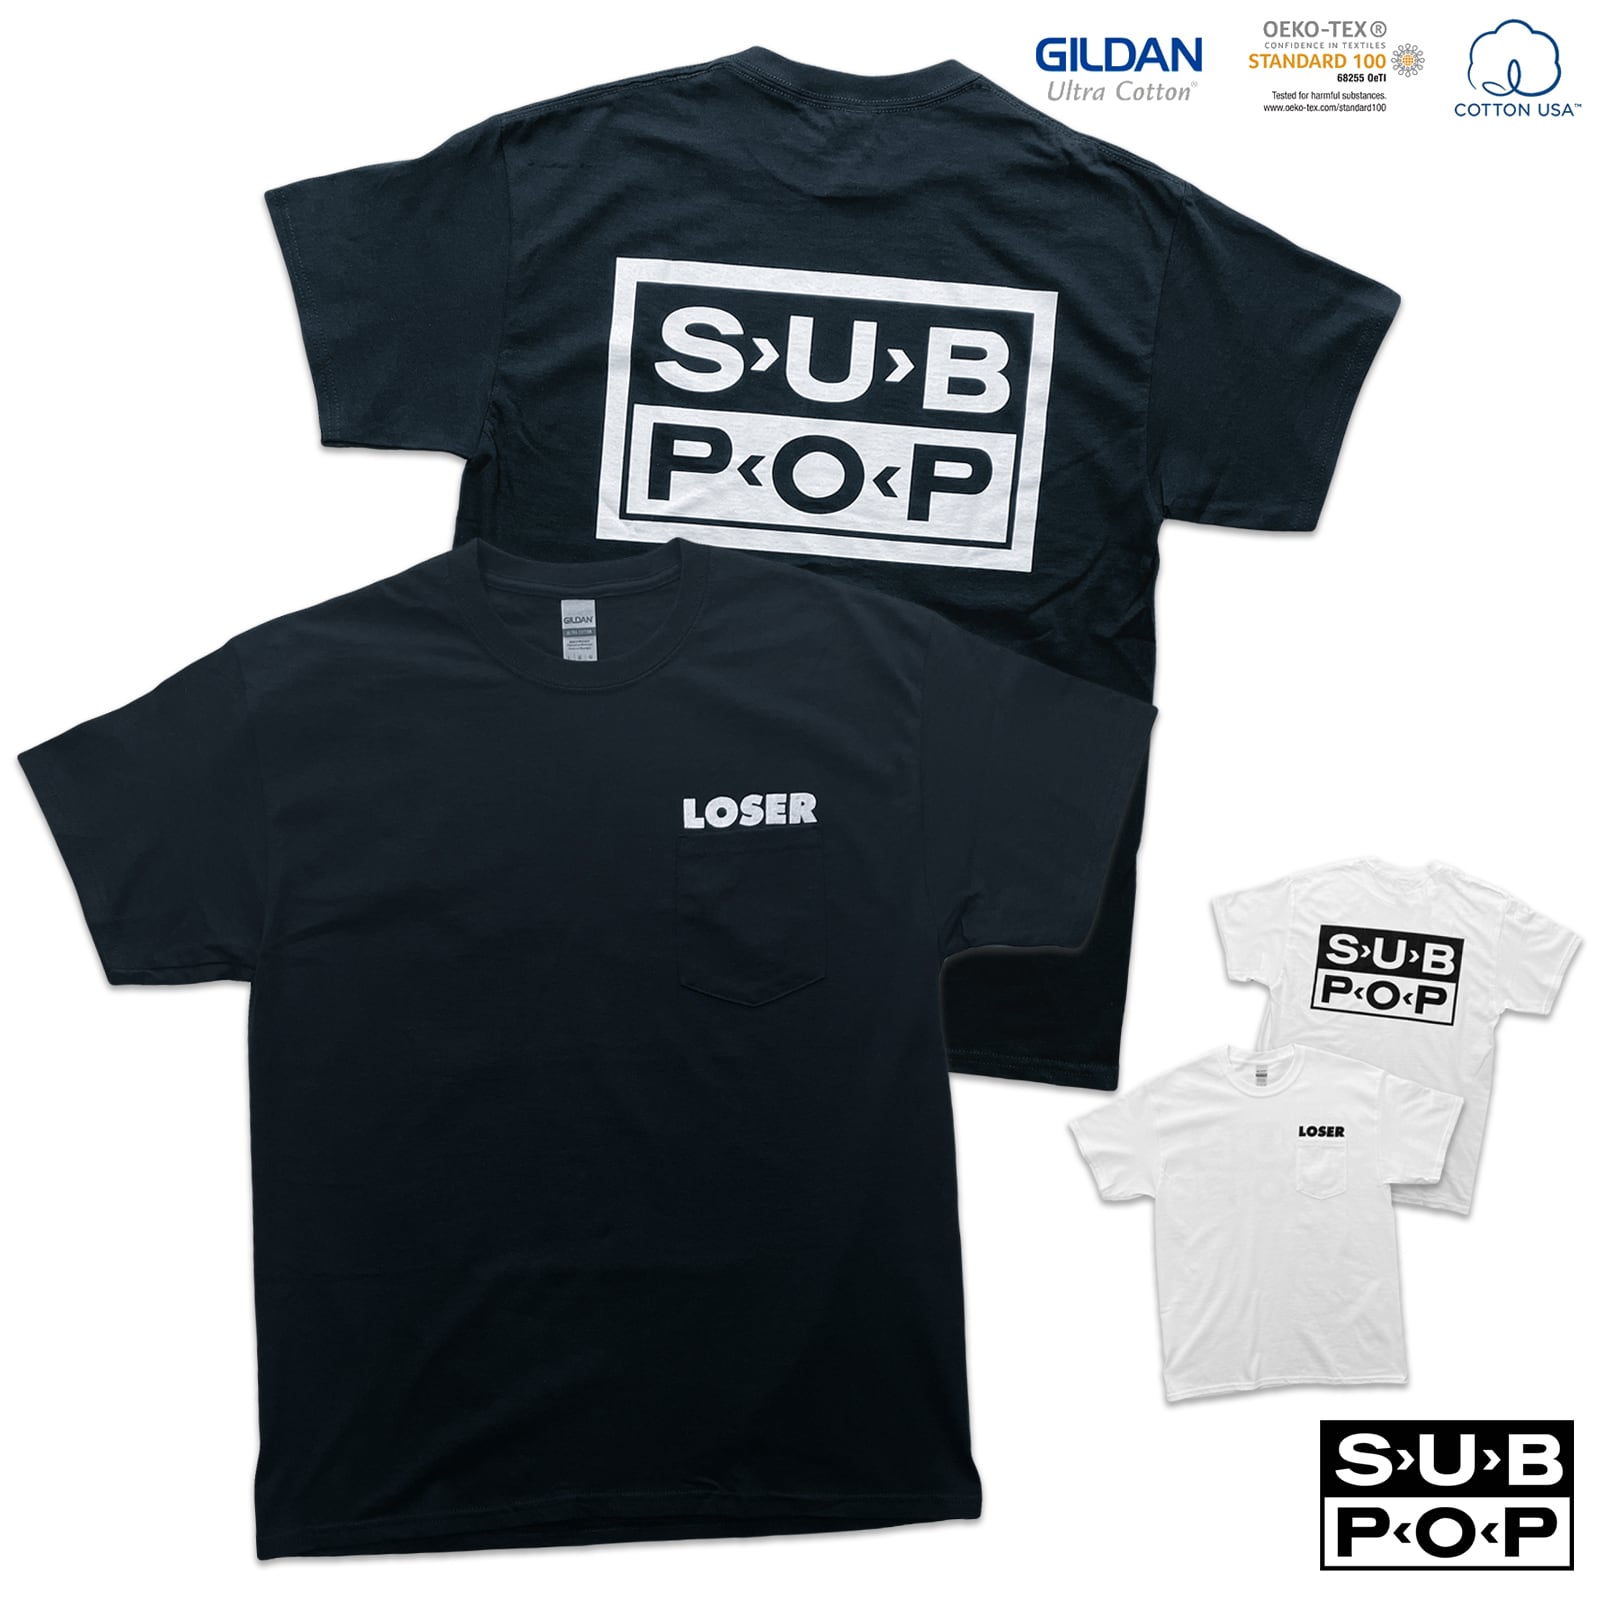 SUB POP 「LOSER 」 「オルタナ ロック グランジ バンド」 ポケTシャツ 「ポケットTシャツ」【GILDAN USA】  2300-subpop-loser | oguoy/Destroy it Create it Share it